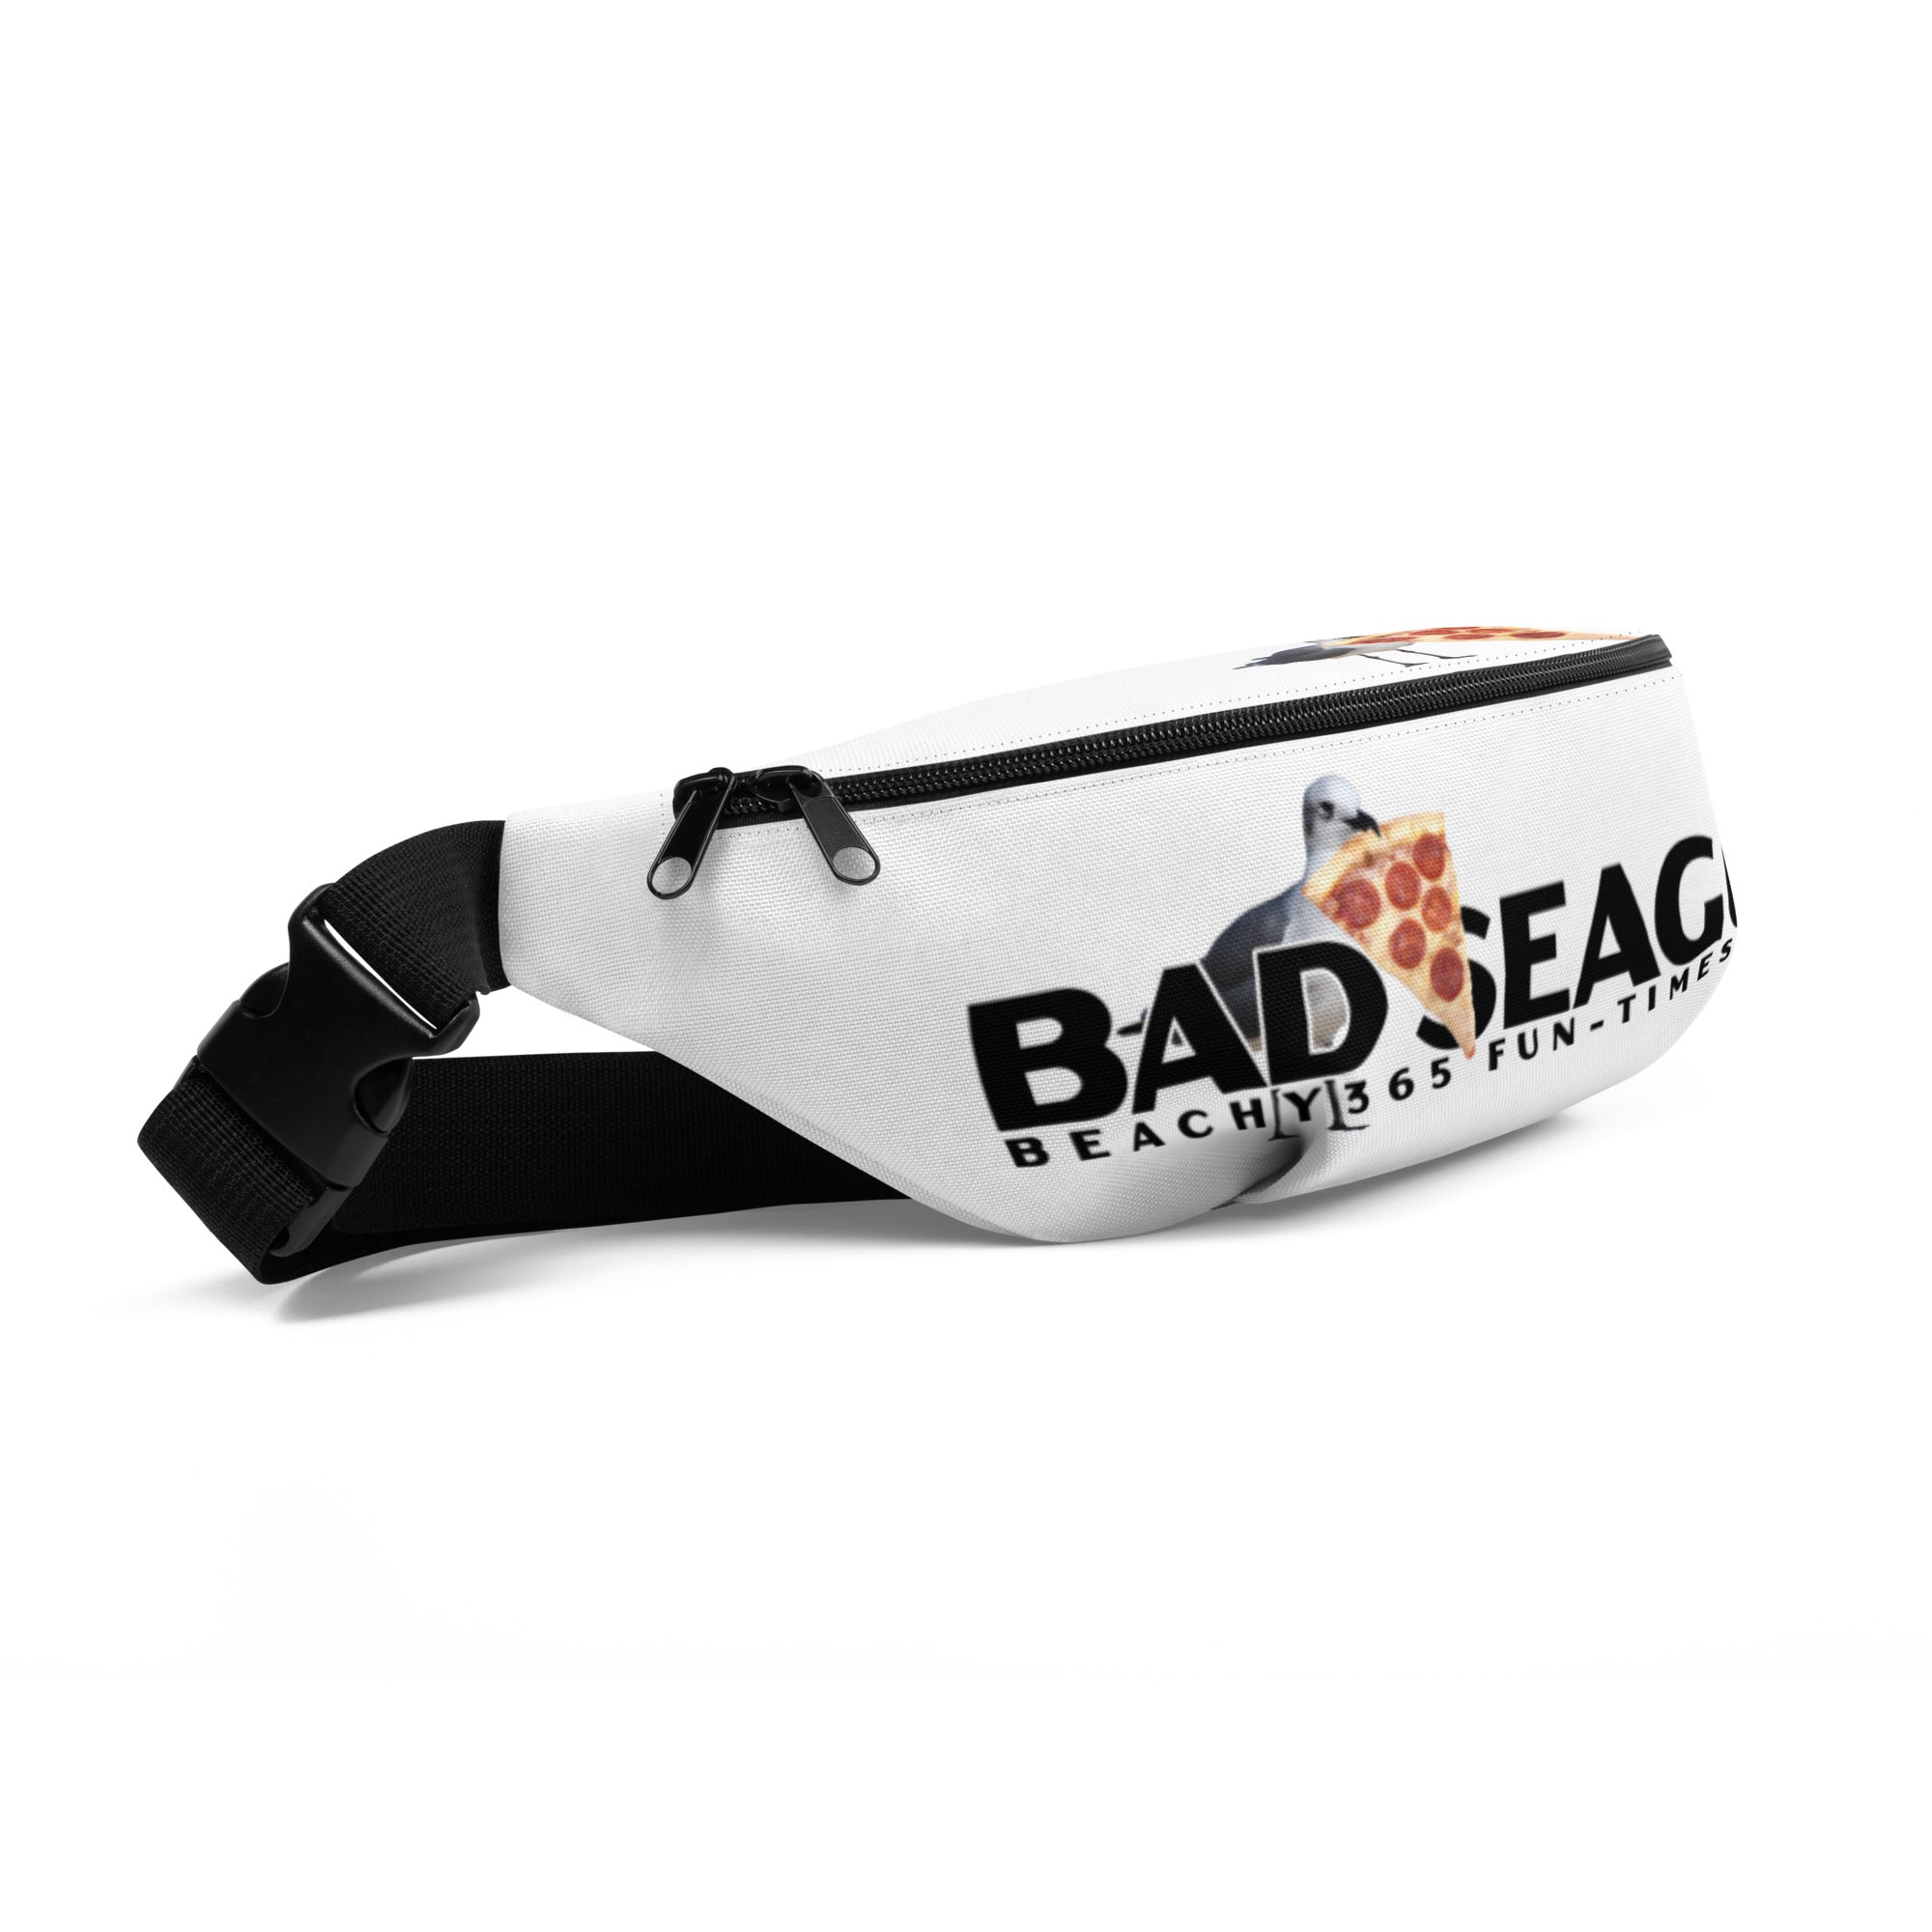 Good Stuff Bag - Bad Seagull Wide Pizza Logo